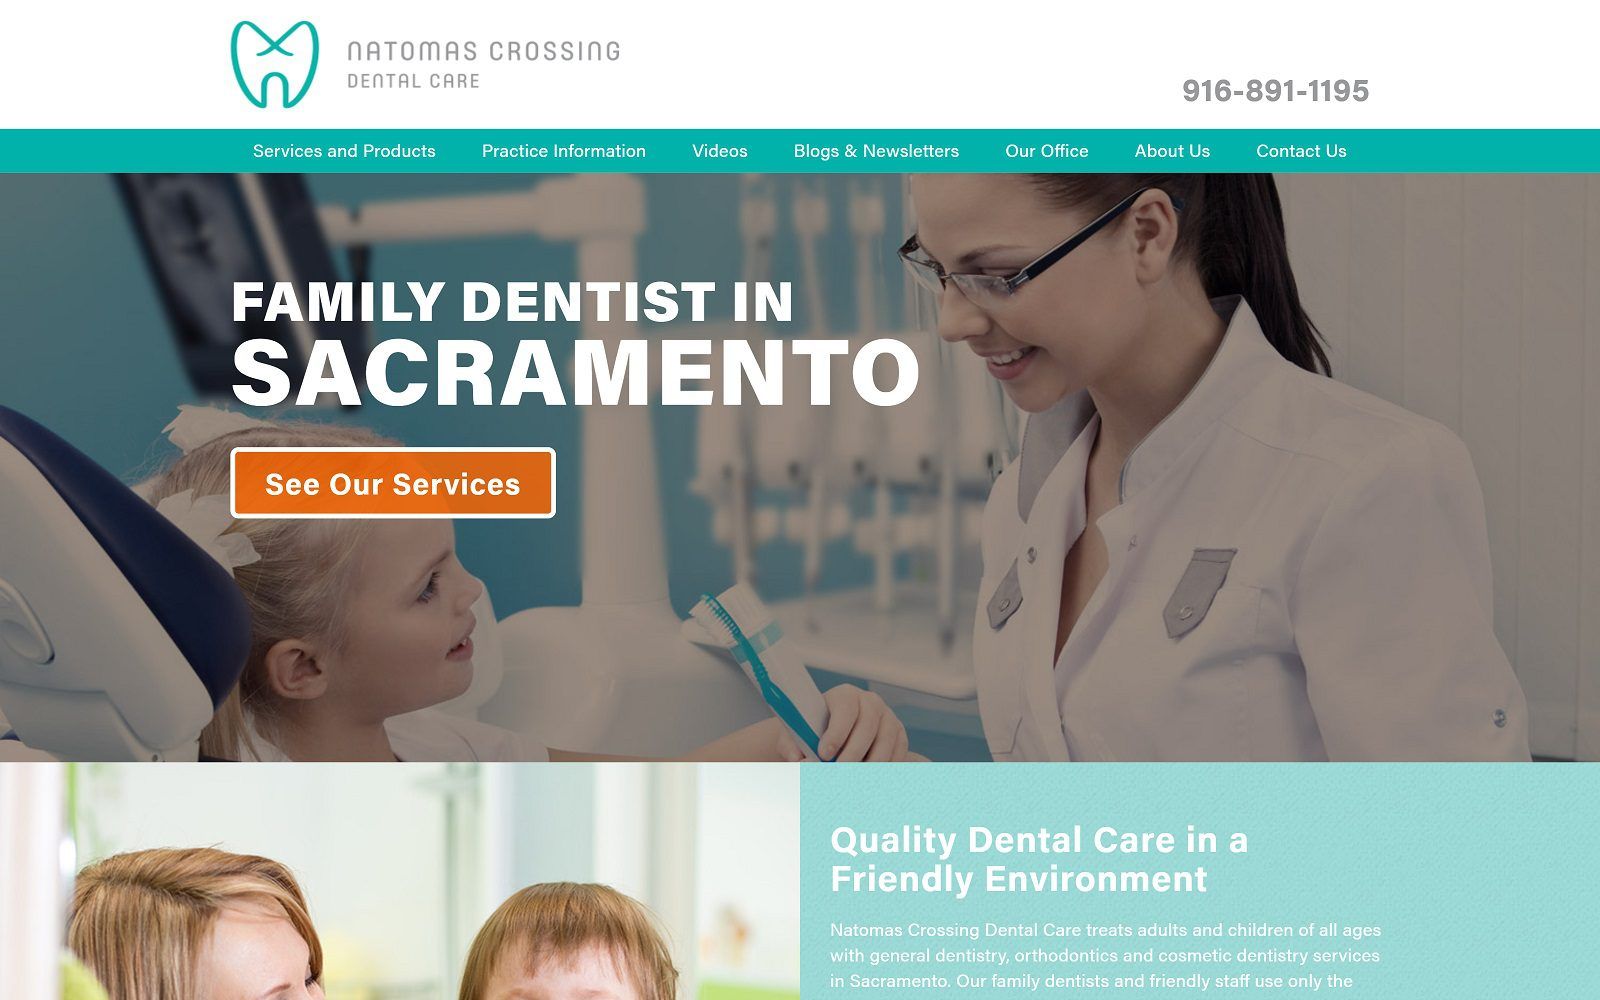 The screenshot of natomas crossing dental care website